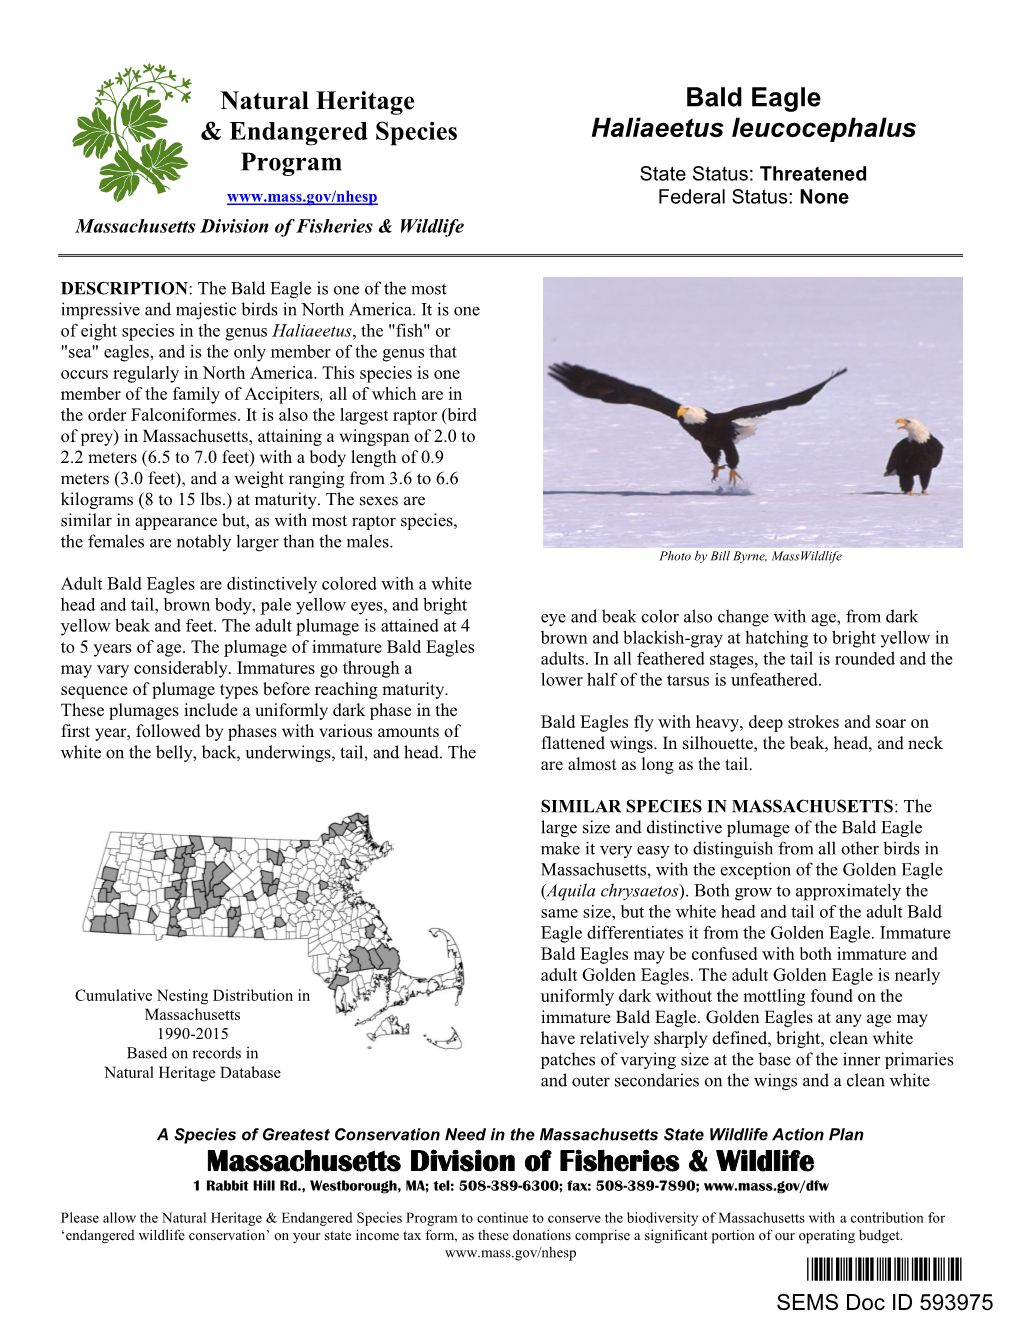 Bald Eagle, Haliaeetus Ieucocephalus, Natural Heritage and Endangered Species Program